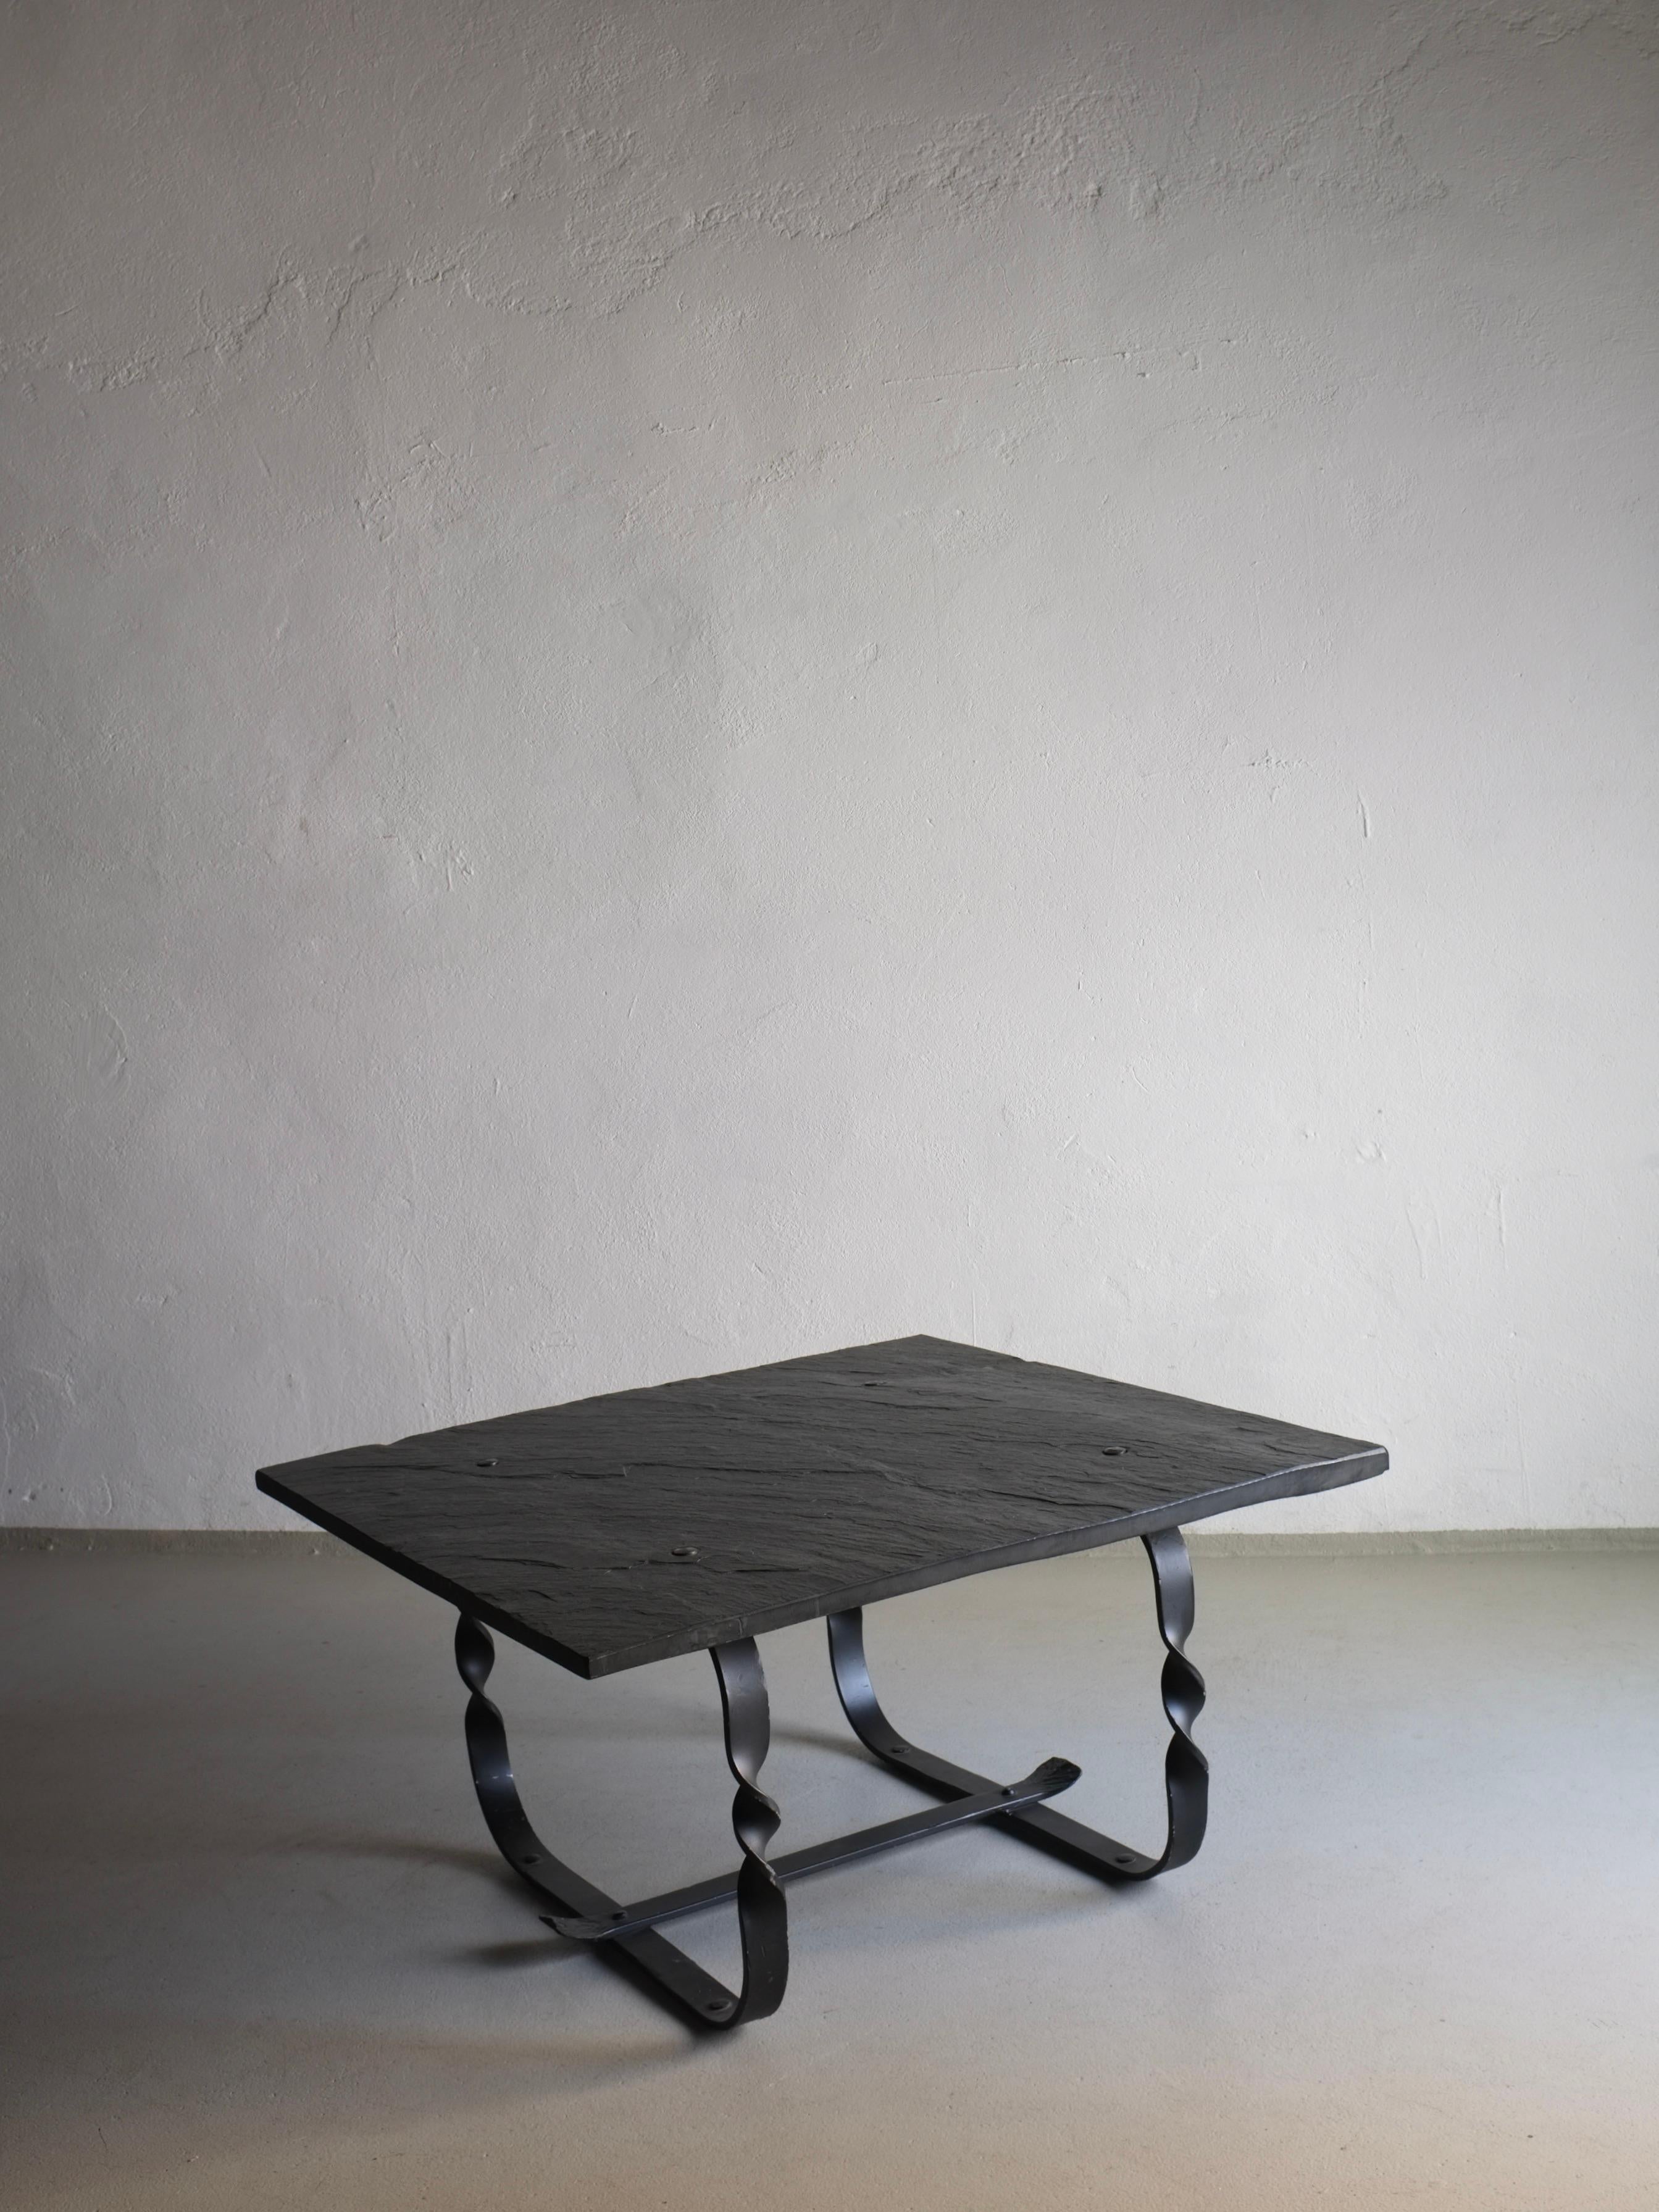 Black Wabi Sabi stone tabletop with wrought metal base. Weighty item.